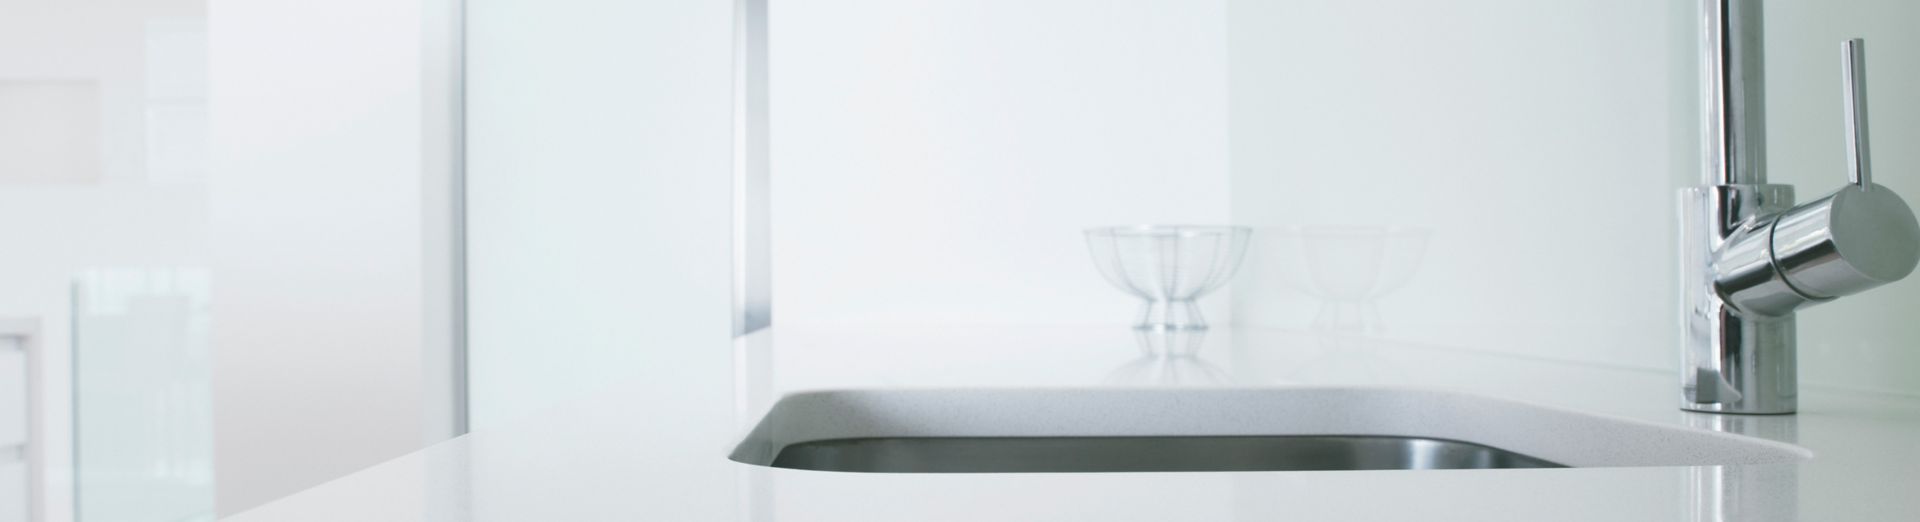 Modern sink and faucet representing a faucet from Moen, an SAP customer